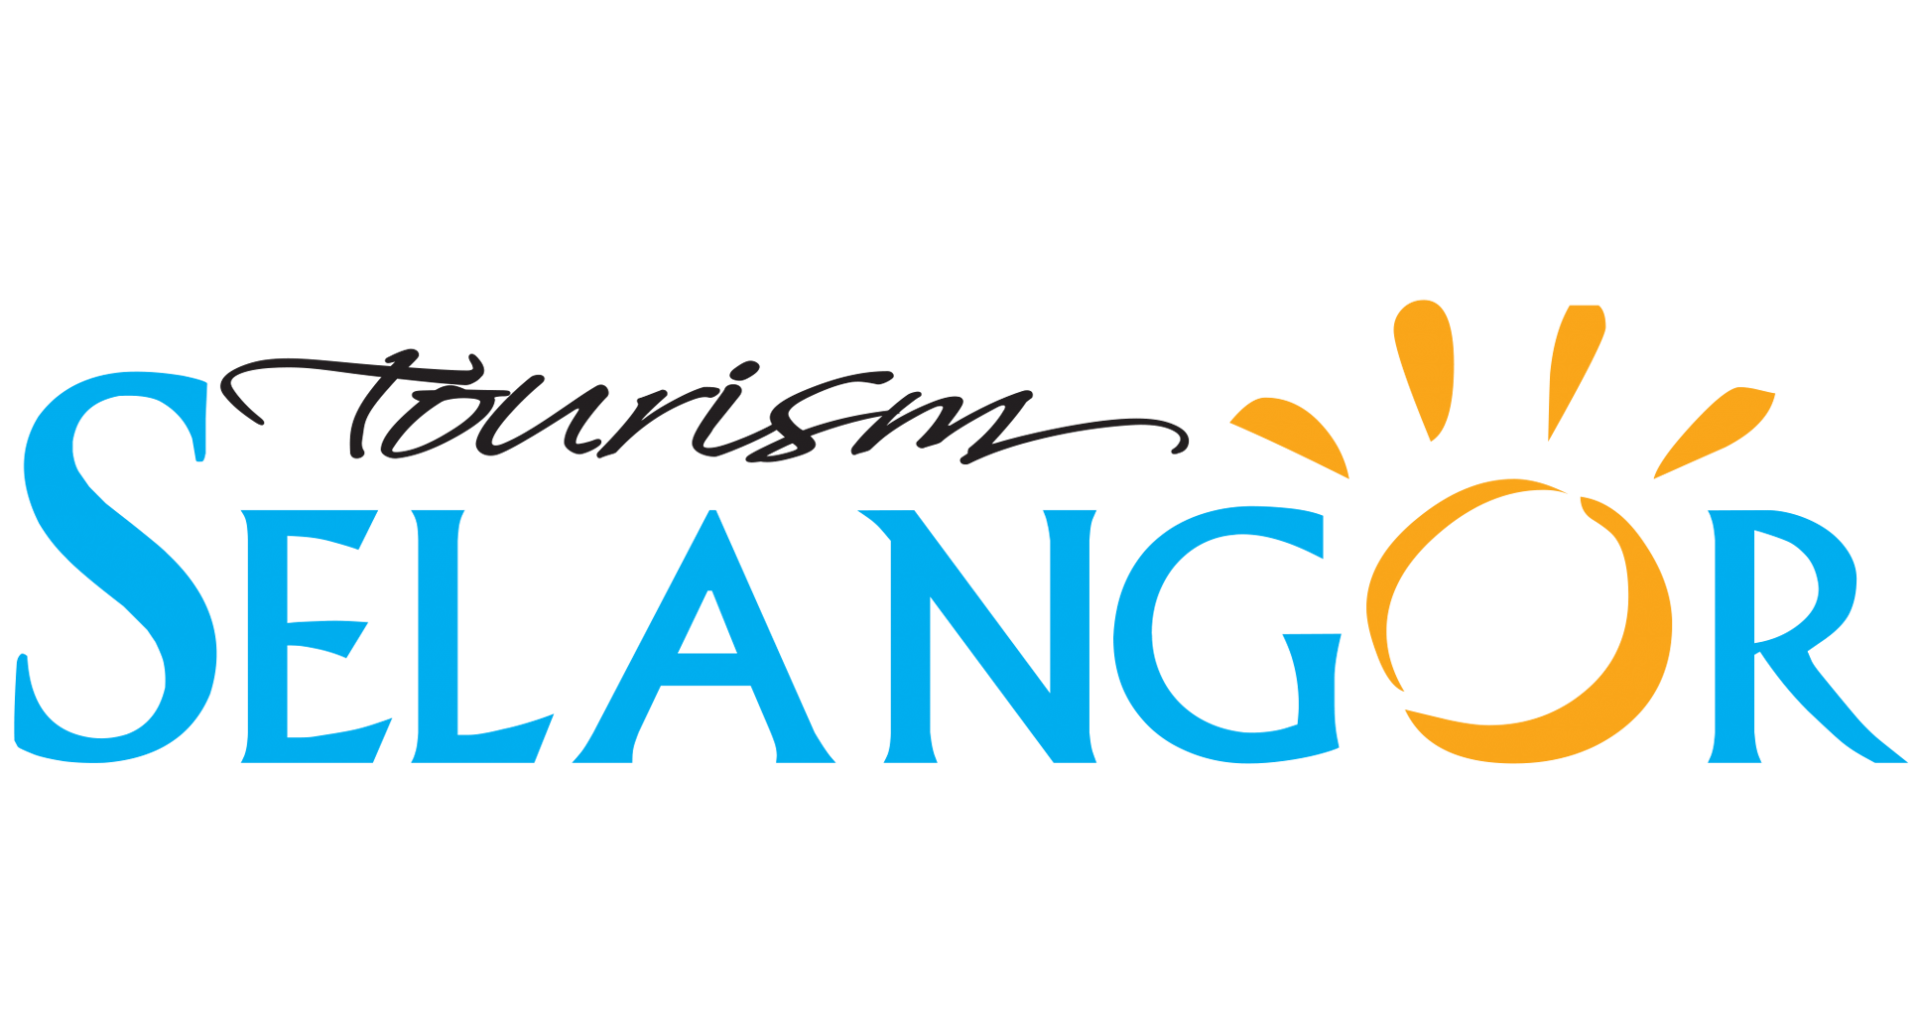 tourism selangor logo png